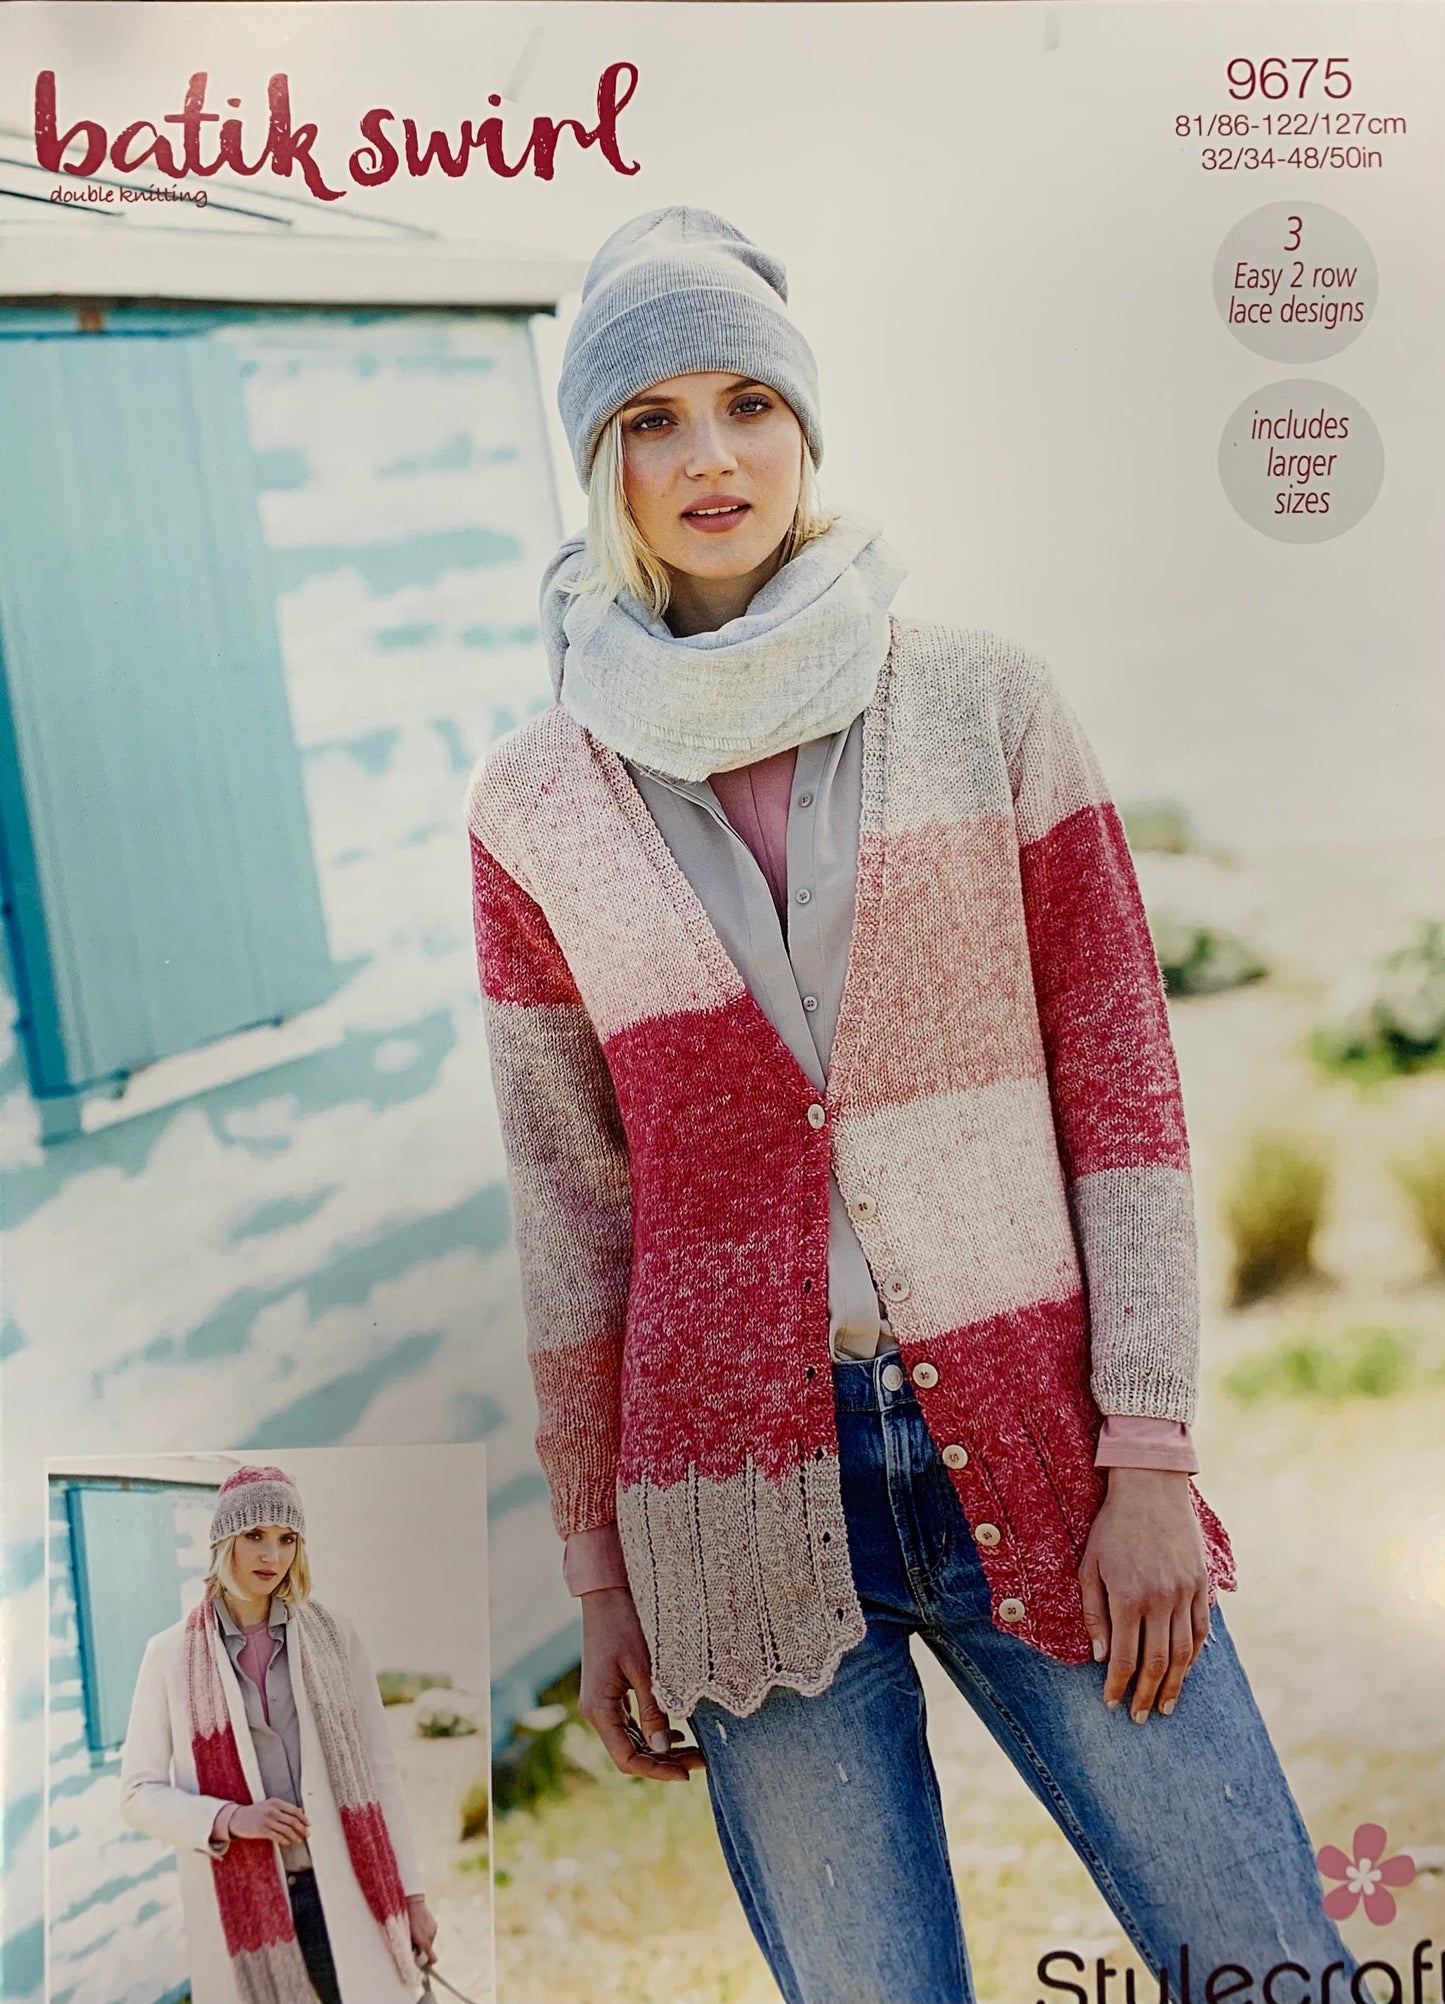 9675 Stylecraft batik swirl dk ladies cardigan, scarf and hat knitting pattern